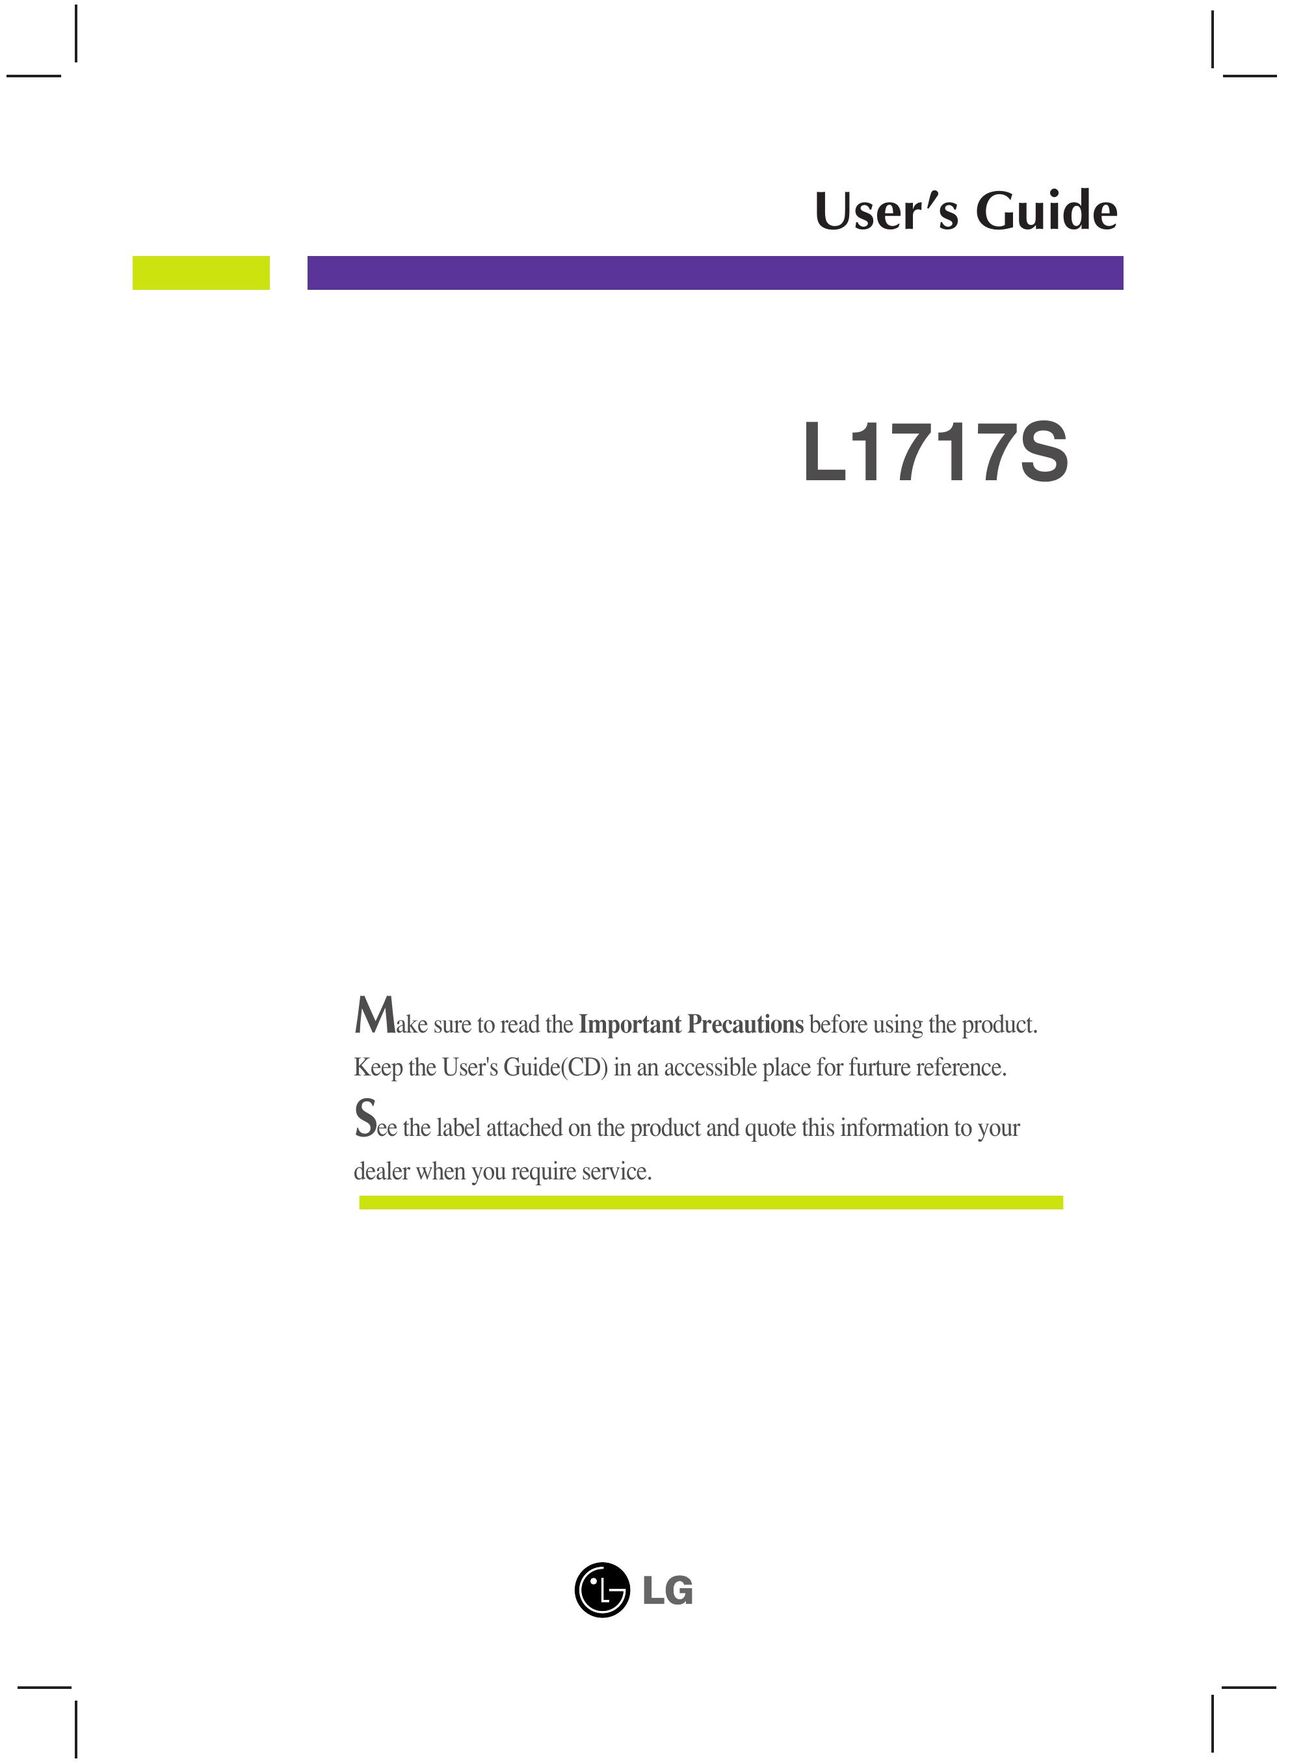 LG Electronics L1717S Kitchen Entertainment Center User Manual